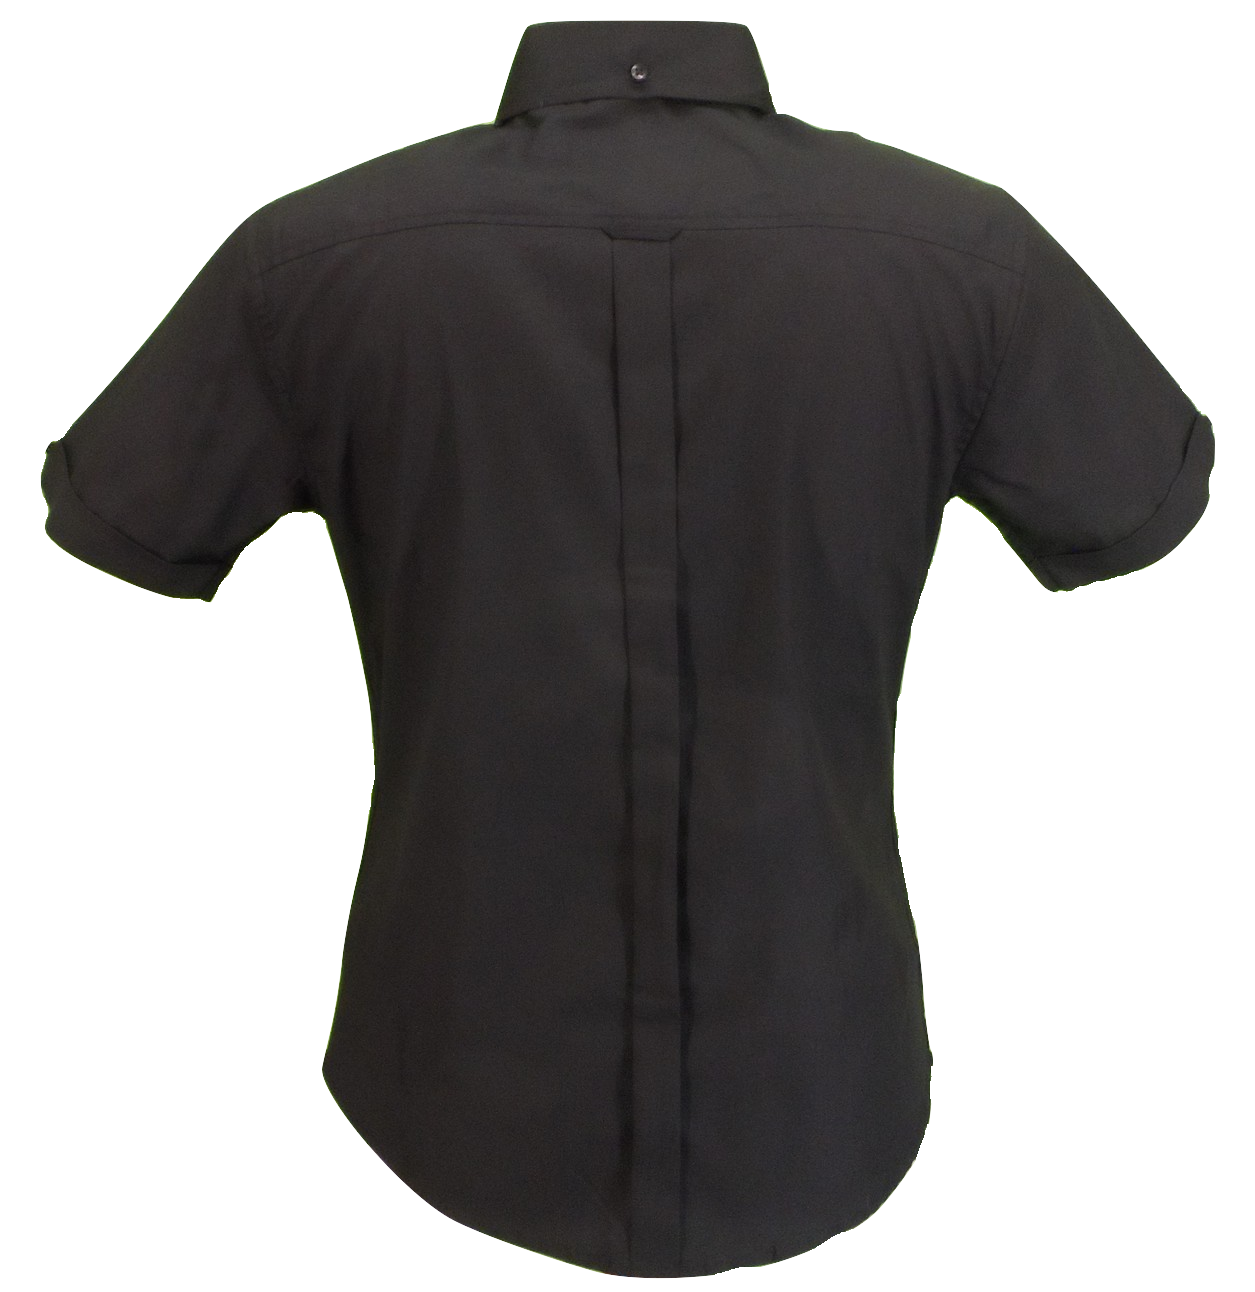 Camisas de manga corta con botones para mujer Oxford negras retro Relco